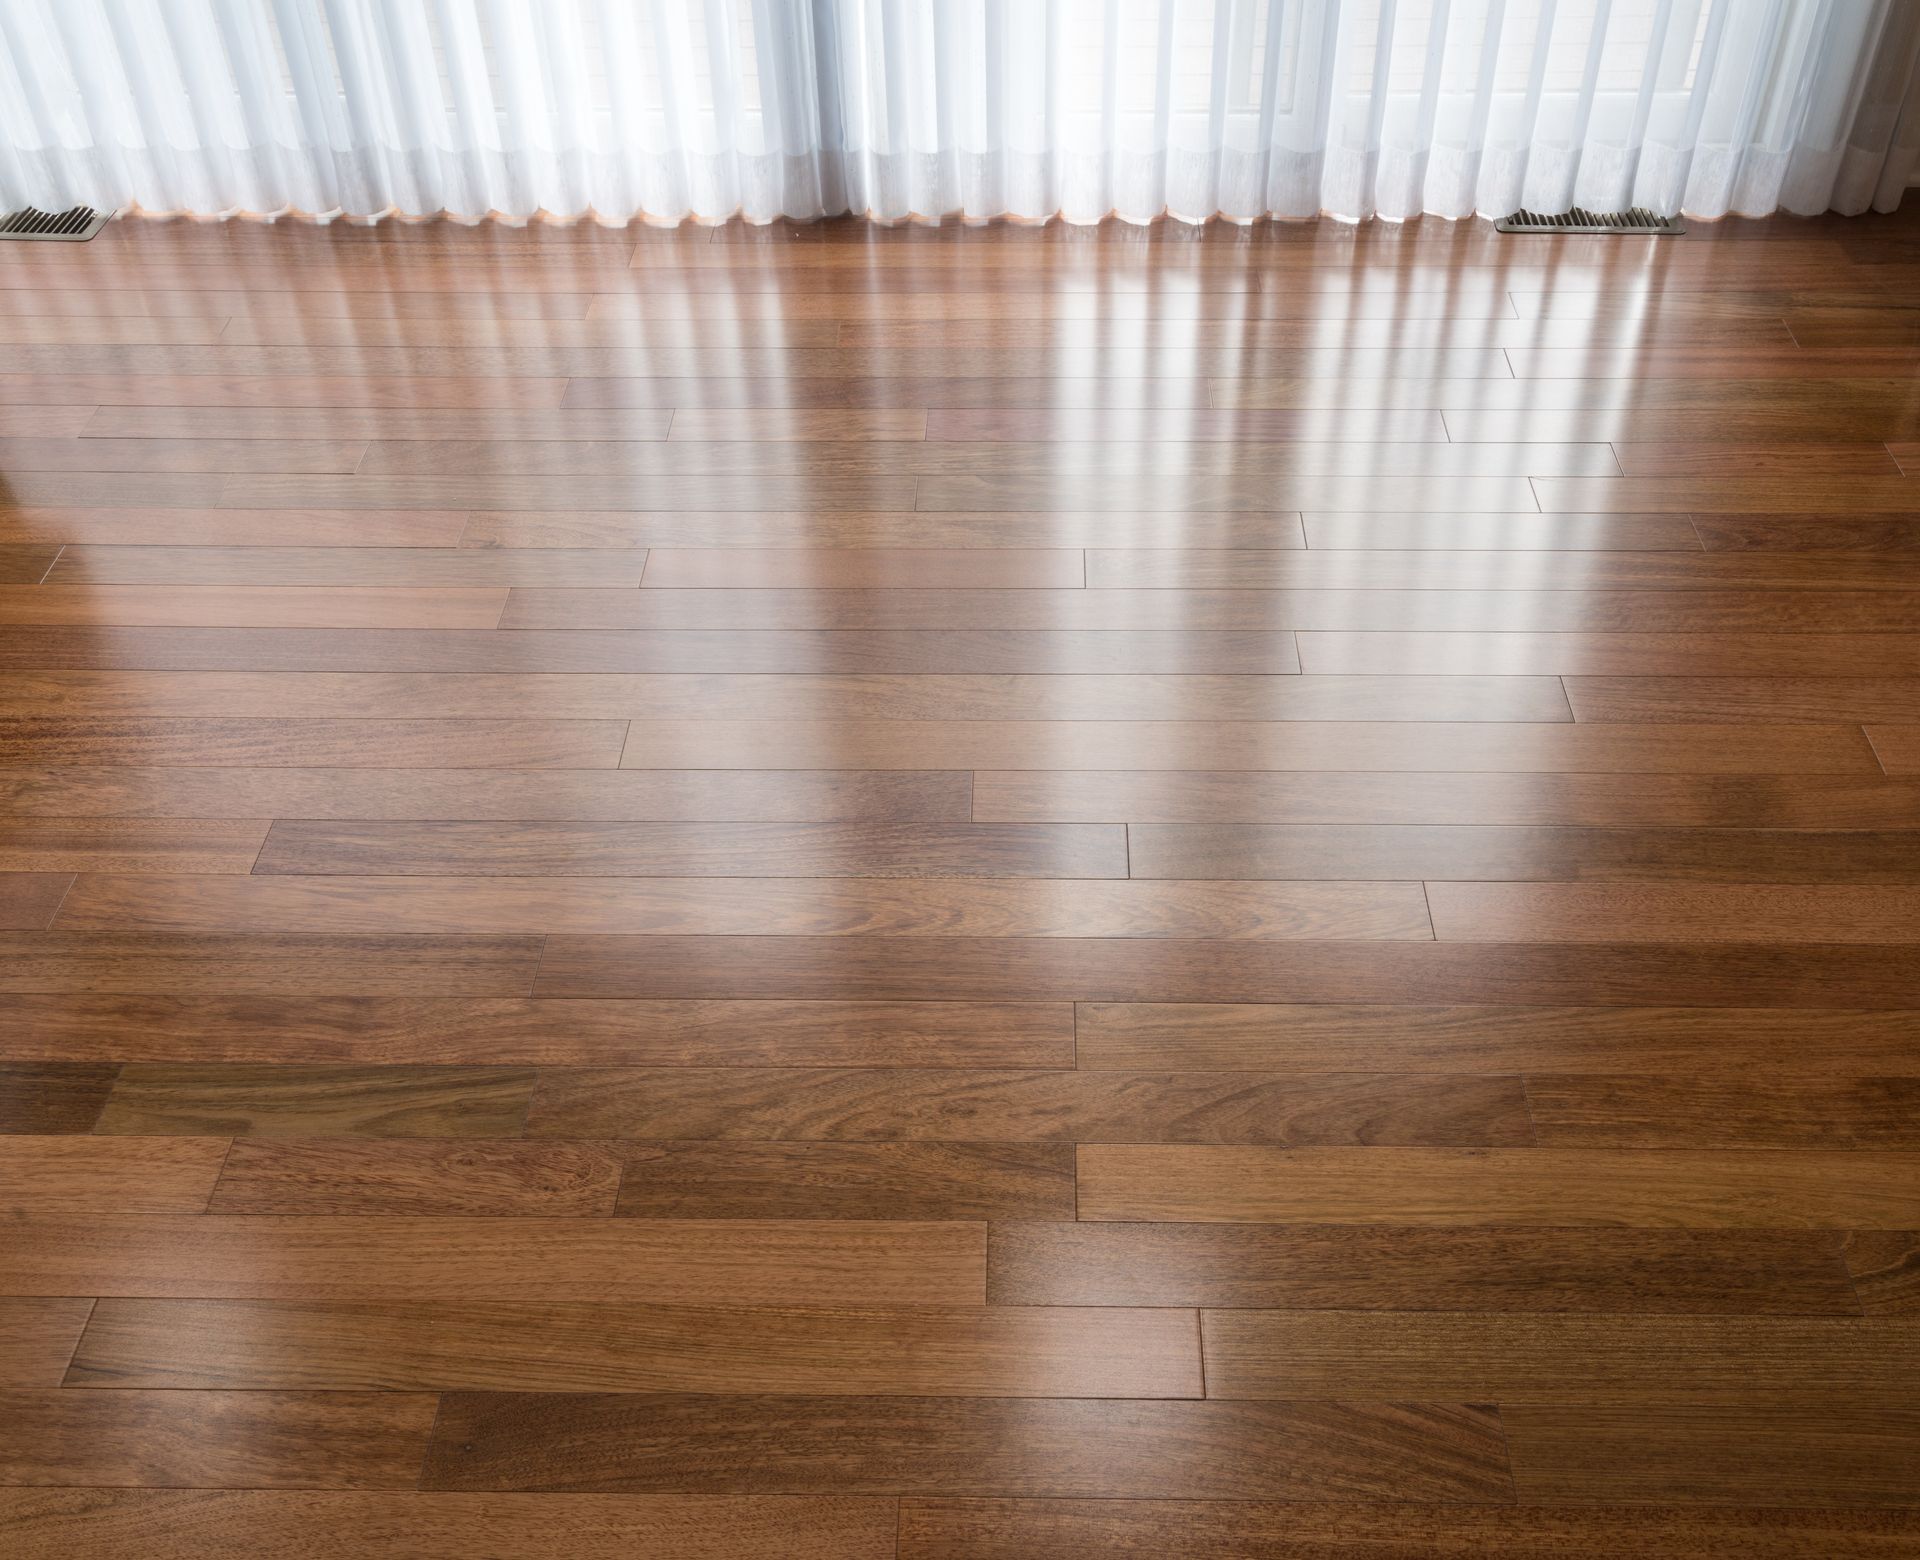 shiny hardwood floor